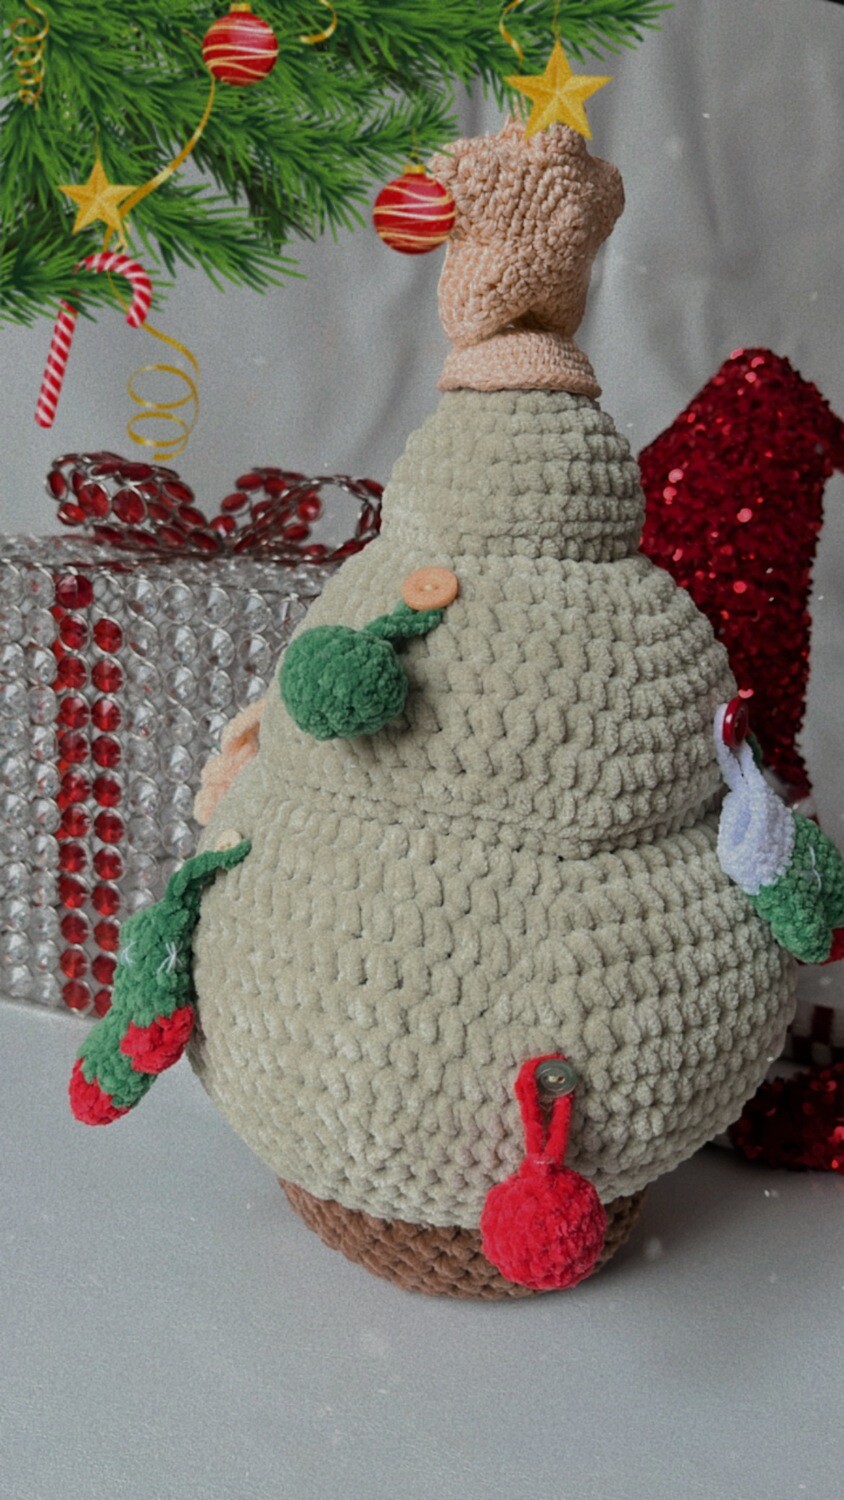 Decorate Your Own Amigurumi Christmas Tree